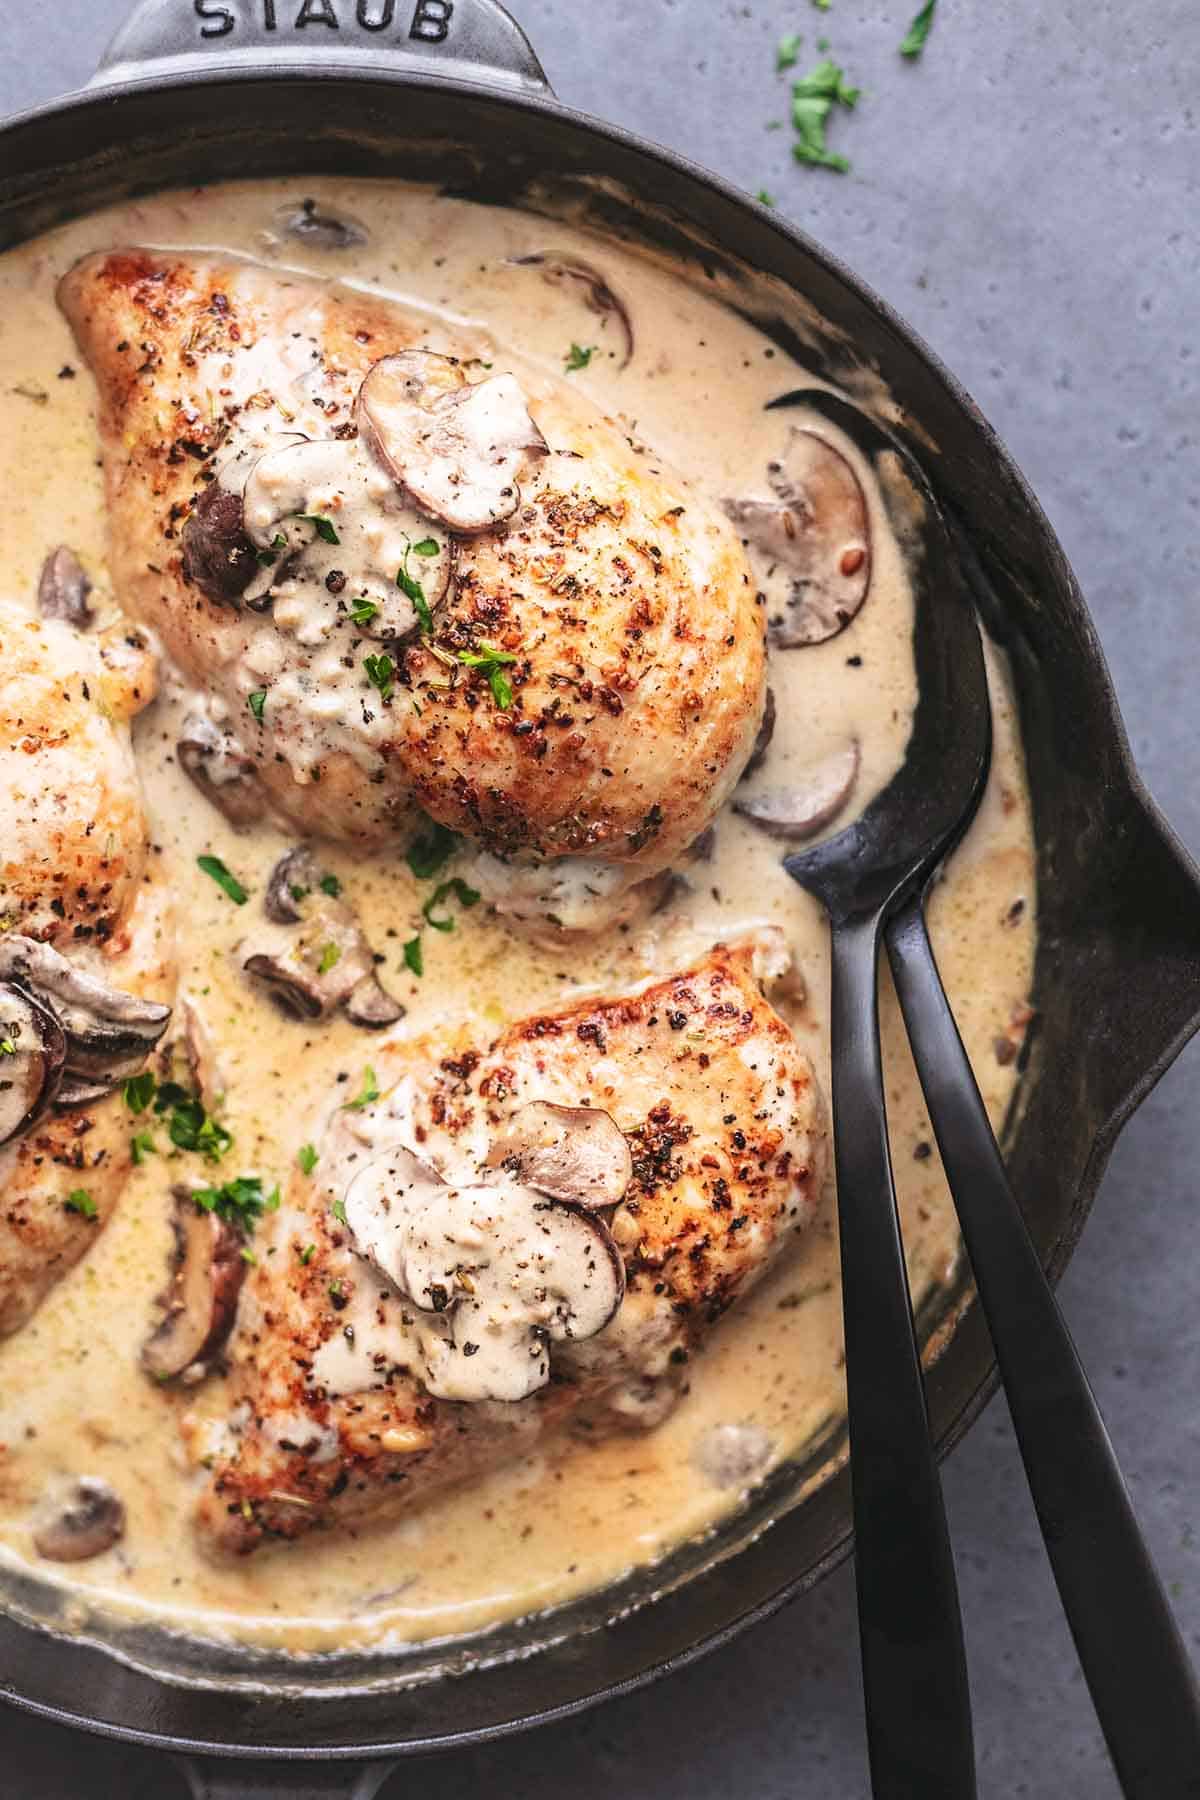 chicken with mushrooms